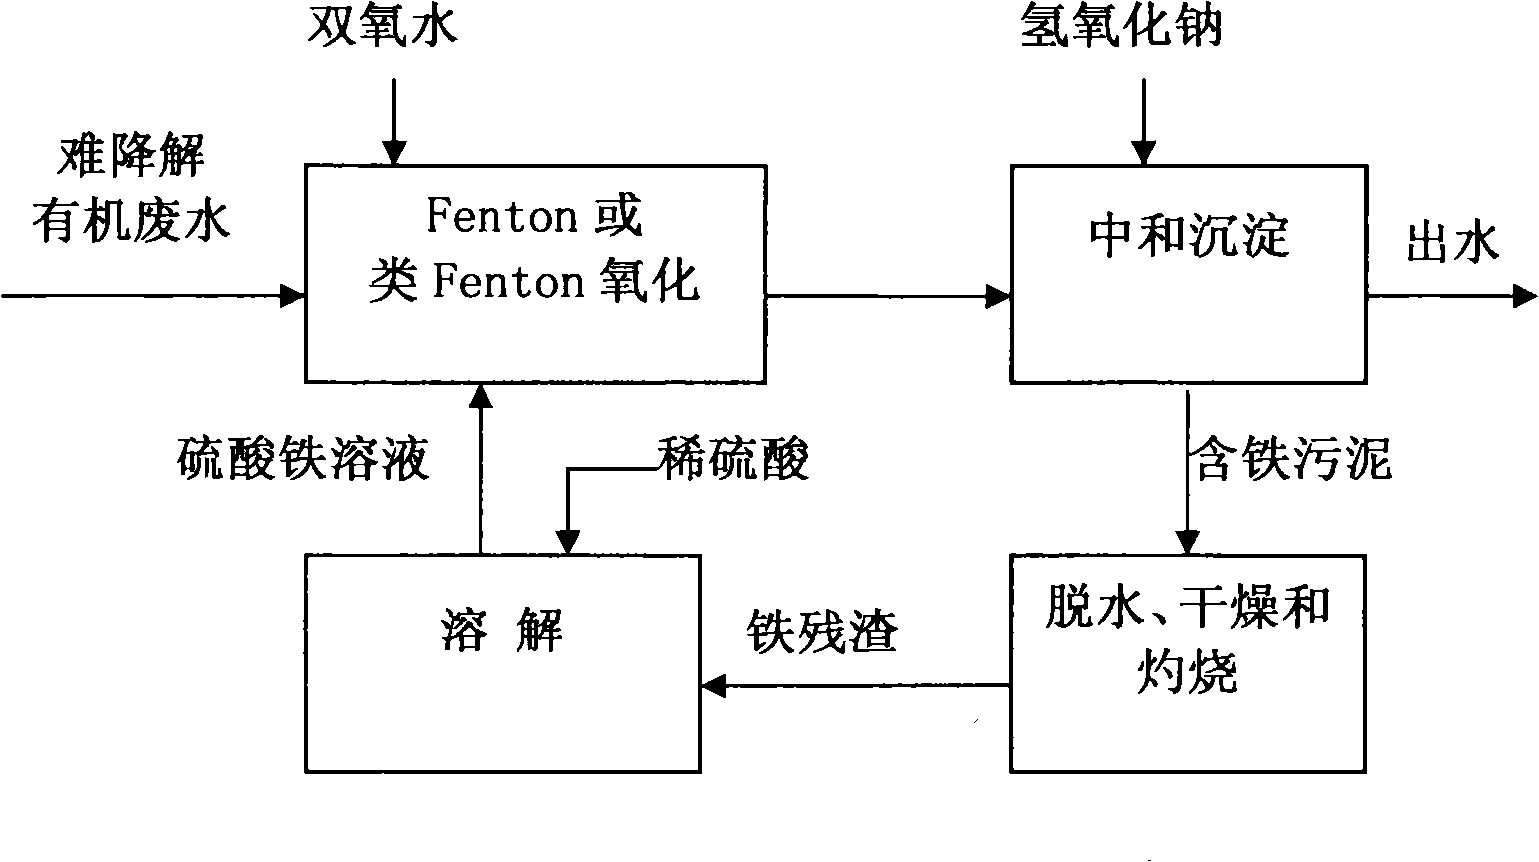 Fenton and Fenton-like reaction catalyst regeneration and reclamation method